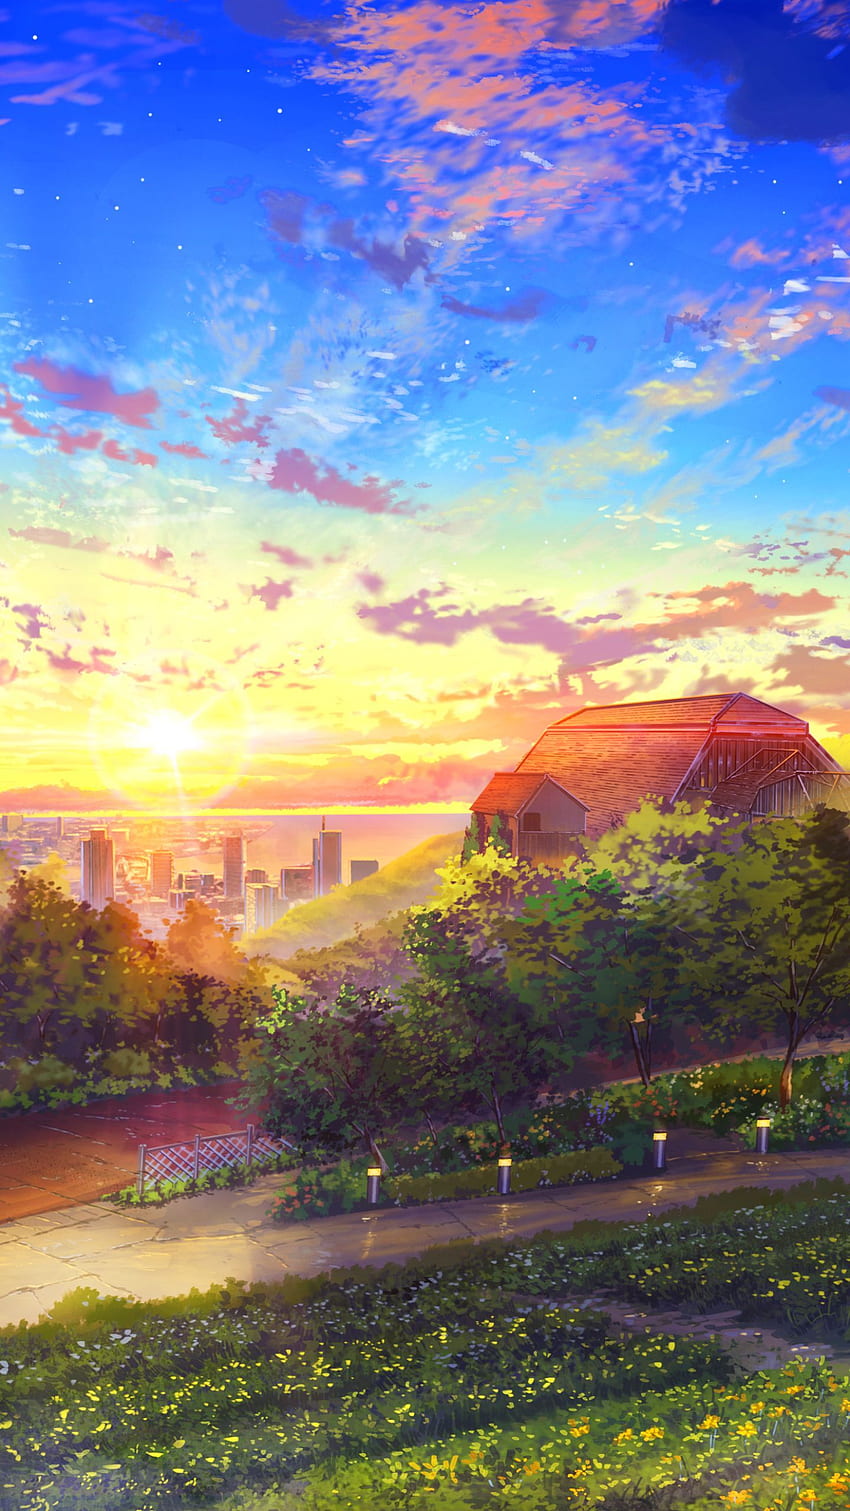 Anime Landscape 4k Ultra HD Wallpaper by Abyss-demhanvico.com.vn